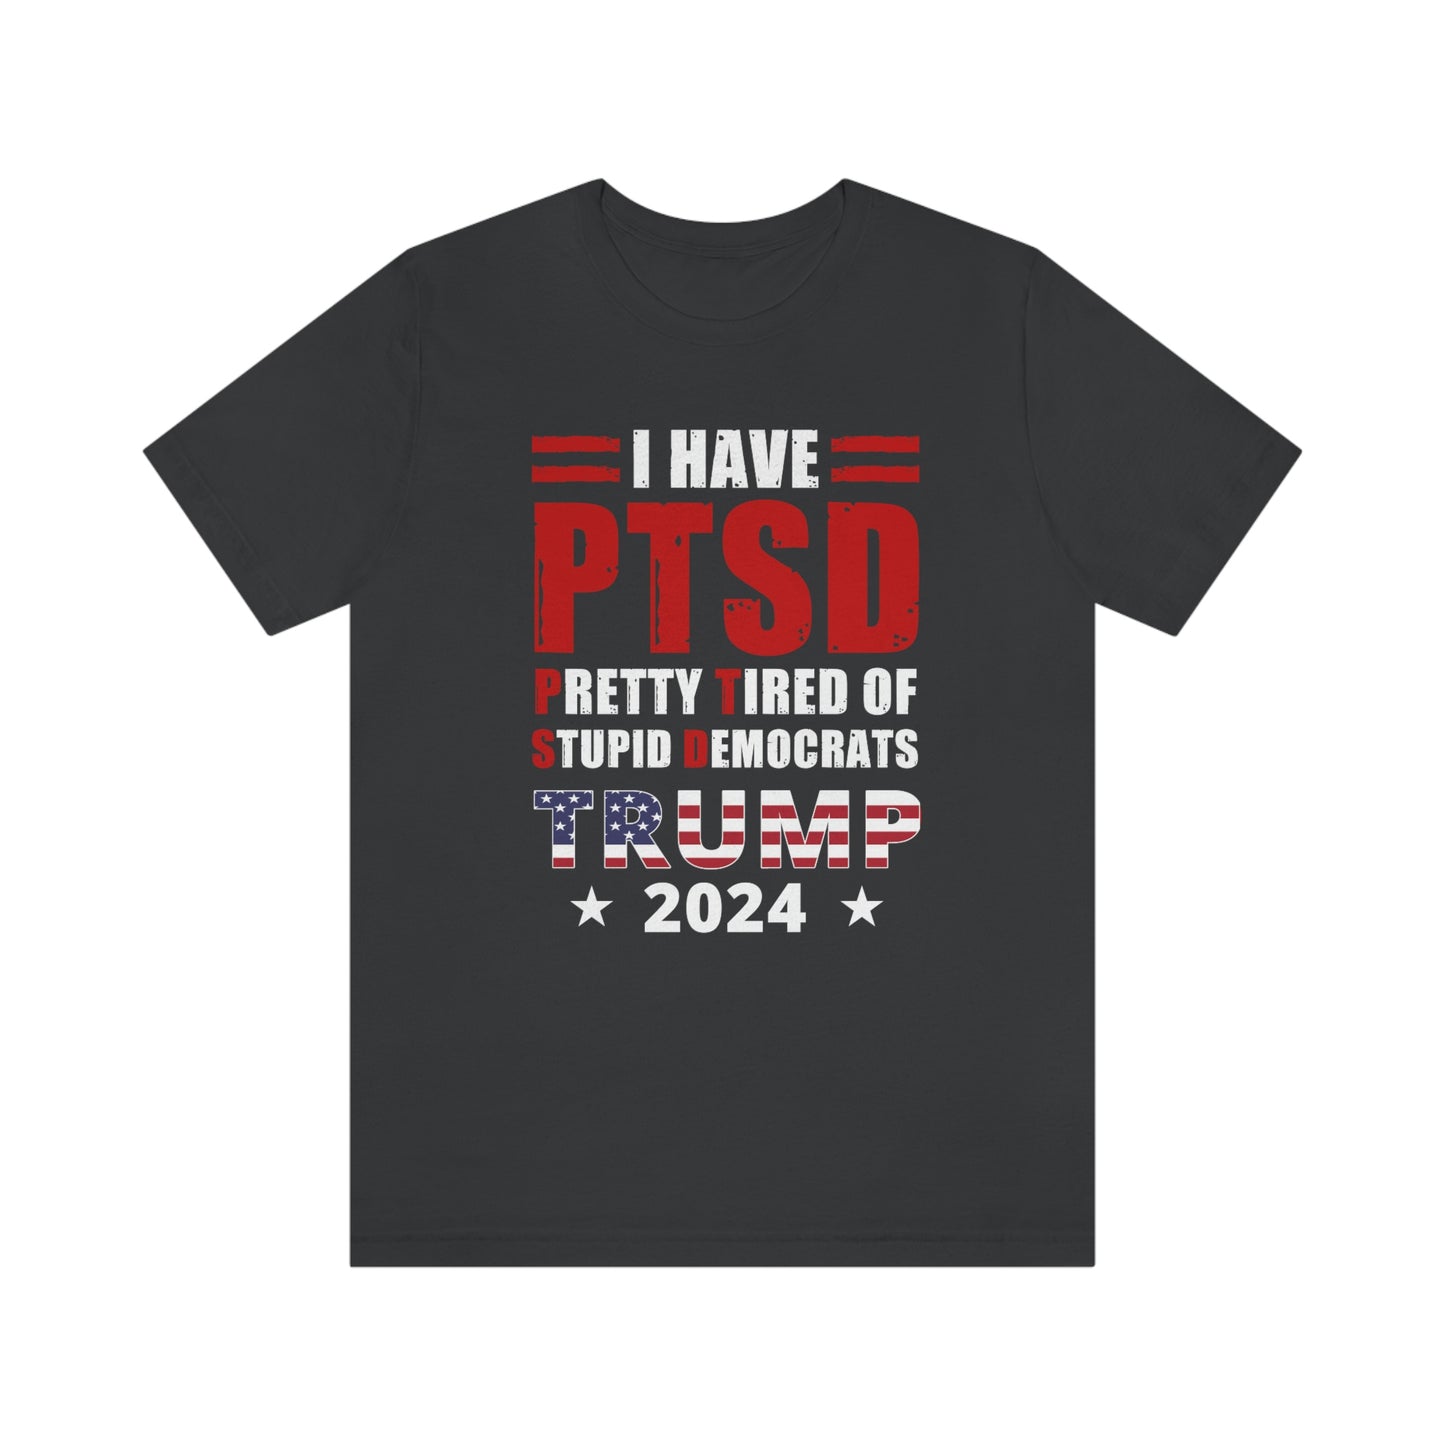 I Have PTSD - Pretty Tired of Stupid Democrats | Mens/Unisex Short Sleeve T-Shirt